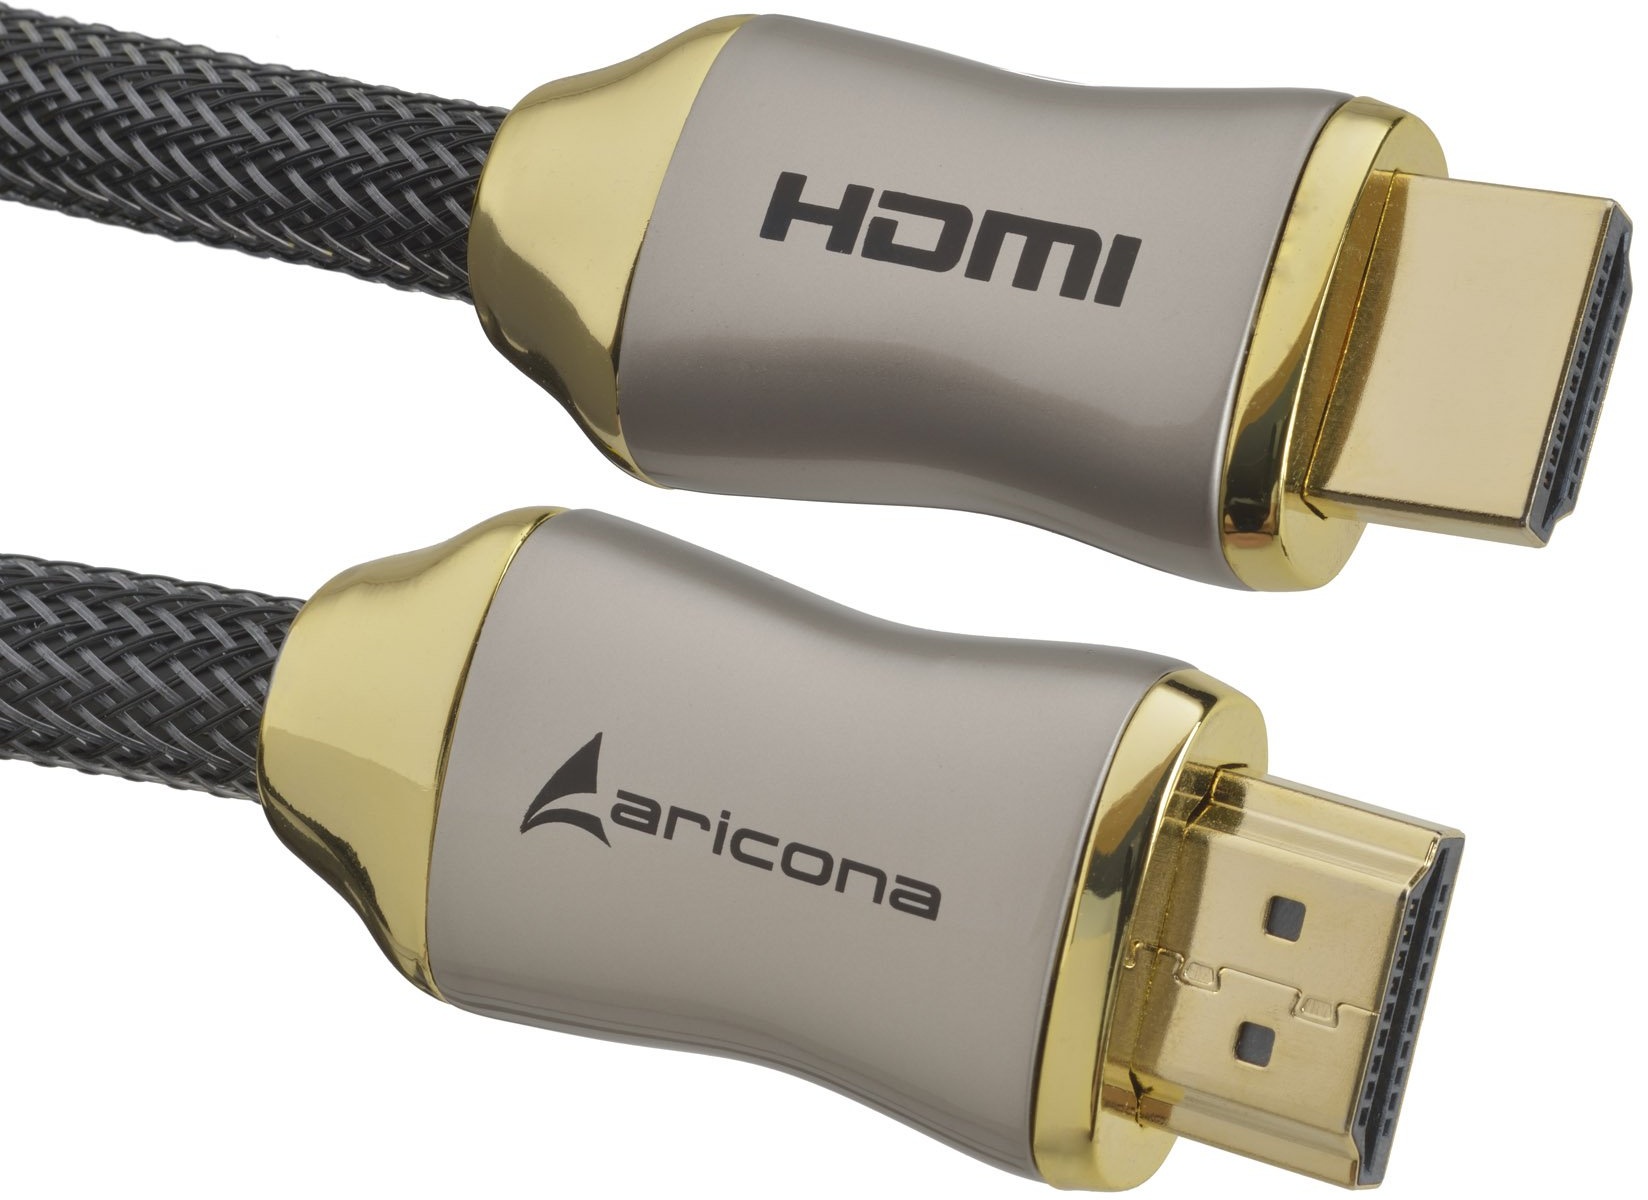 Aricona HDMI Kabel - Premium High End HDMI Kabel 2 Meter - Gold Serie - HDMI 2.0/1.4a - 4K Ultra HD, 3D, Full HD, 1080p, ARC, Ethernet